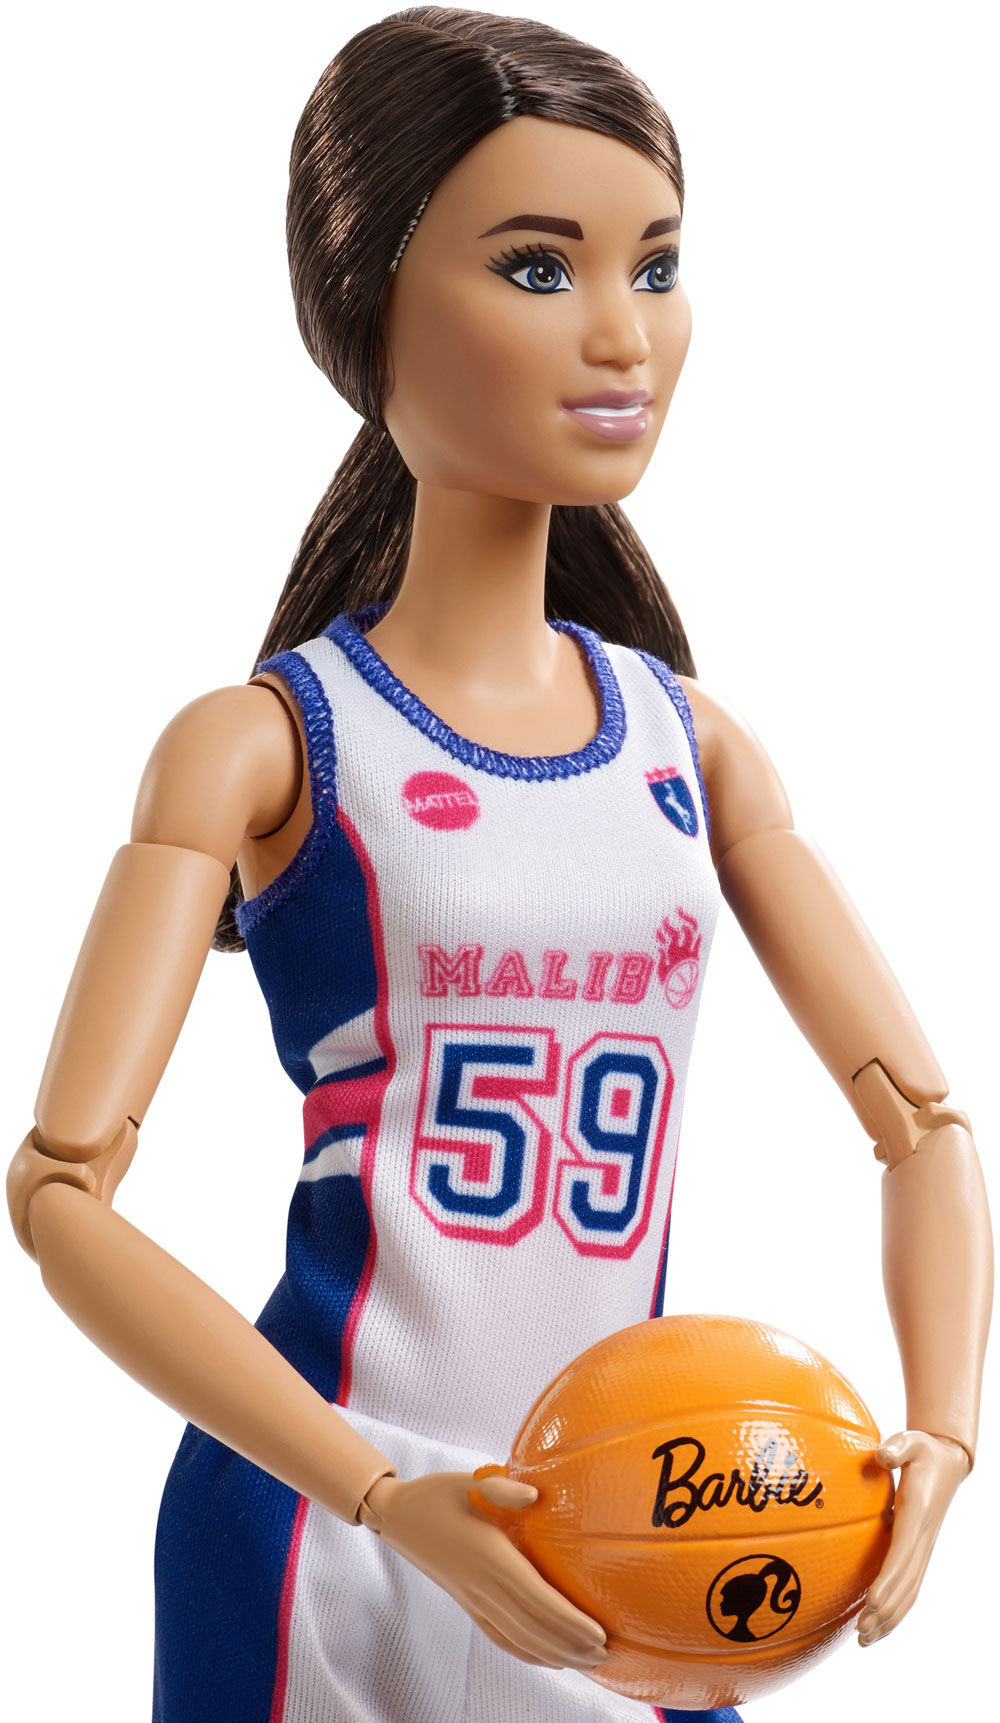 made to move basketball barbie